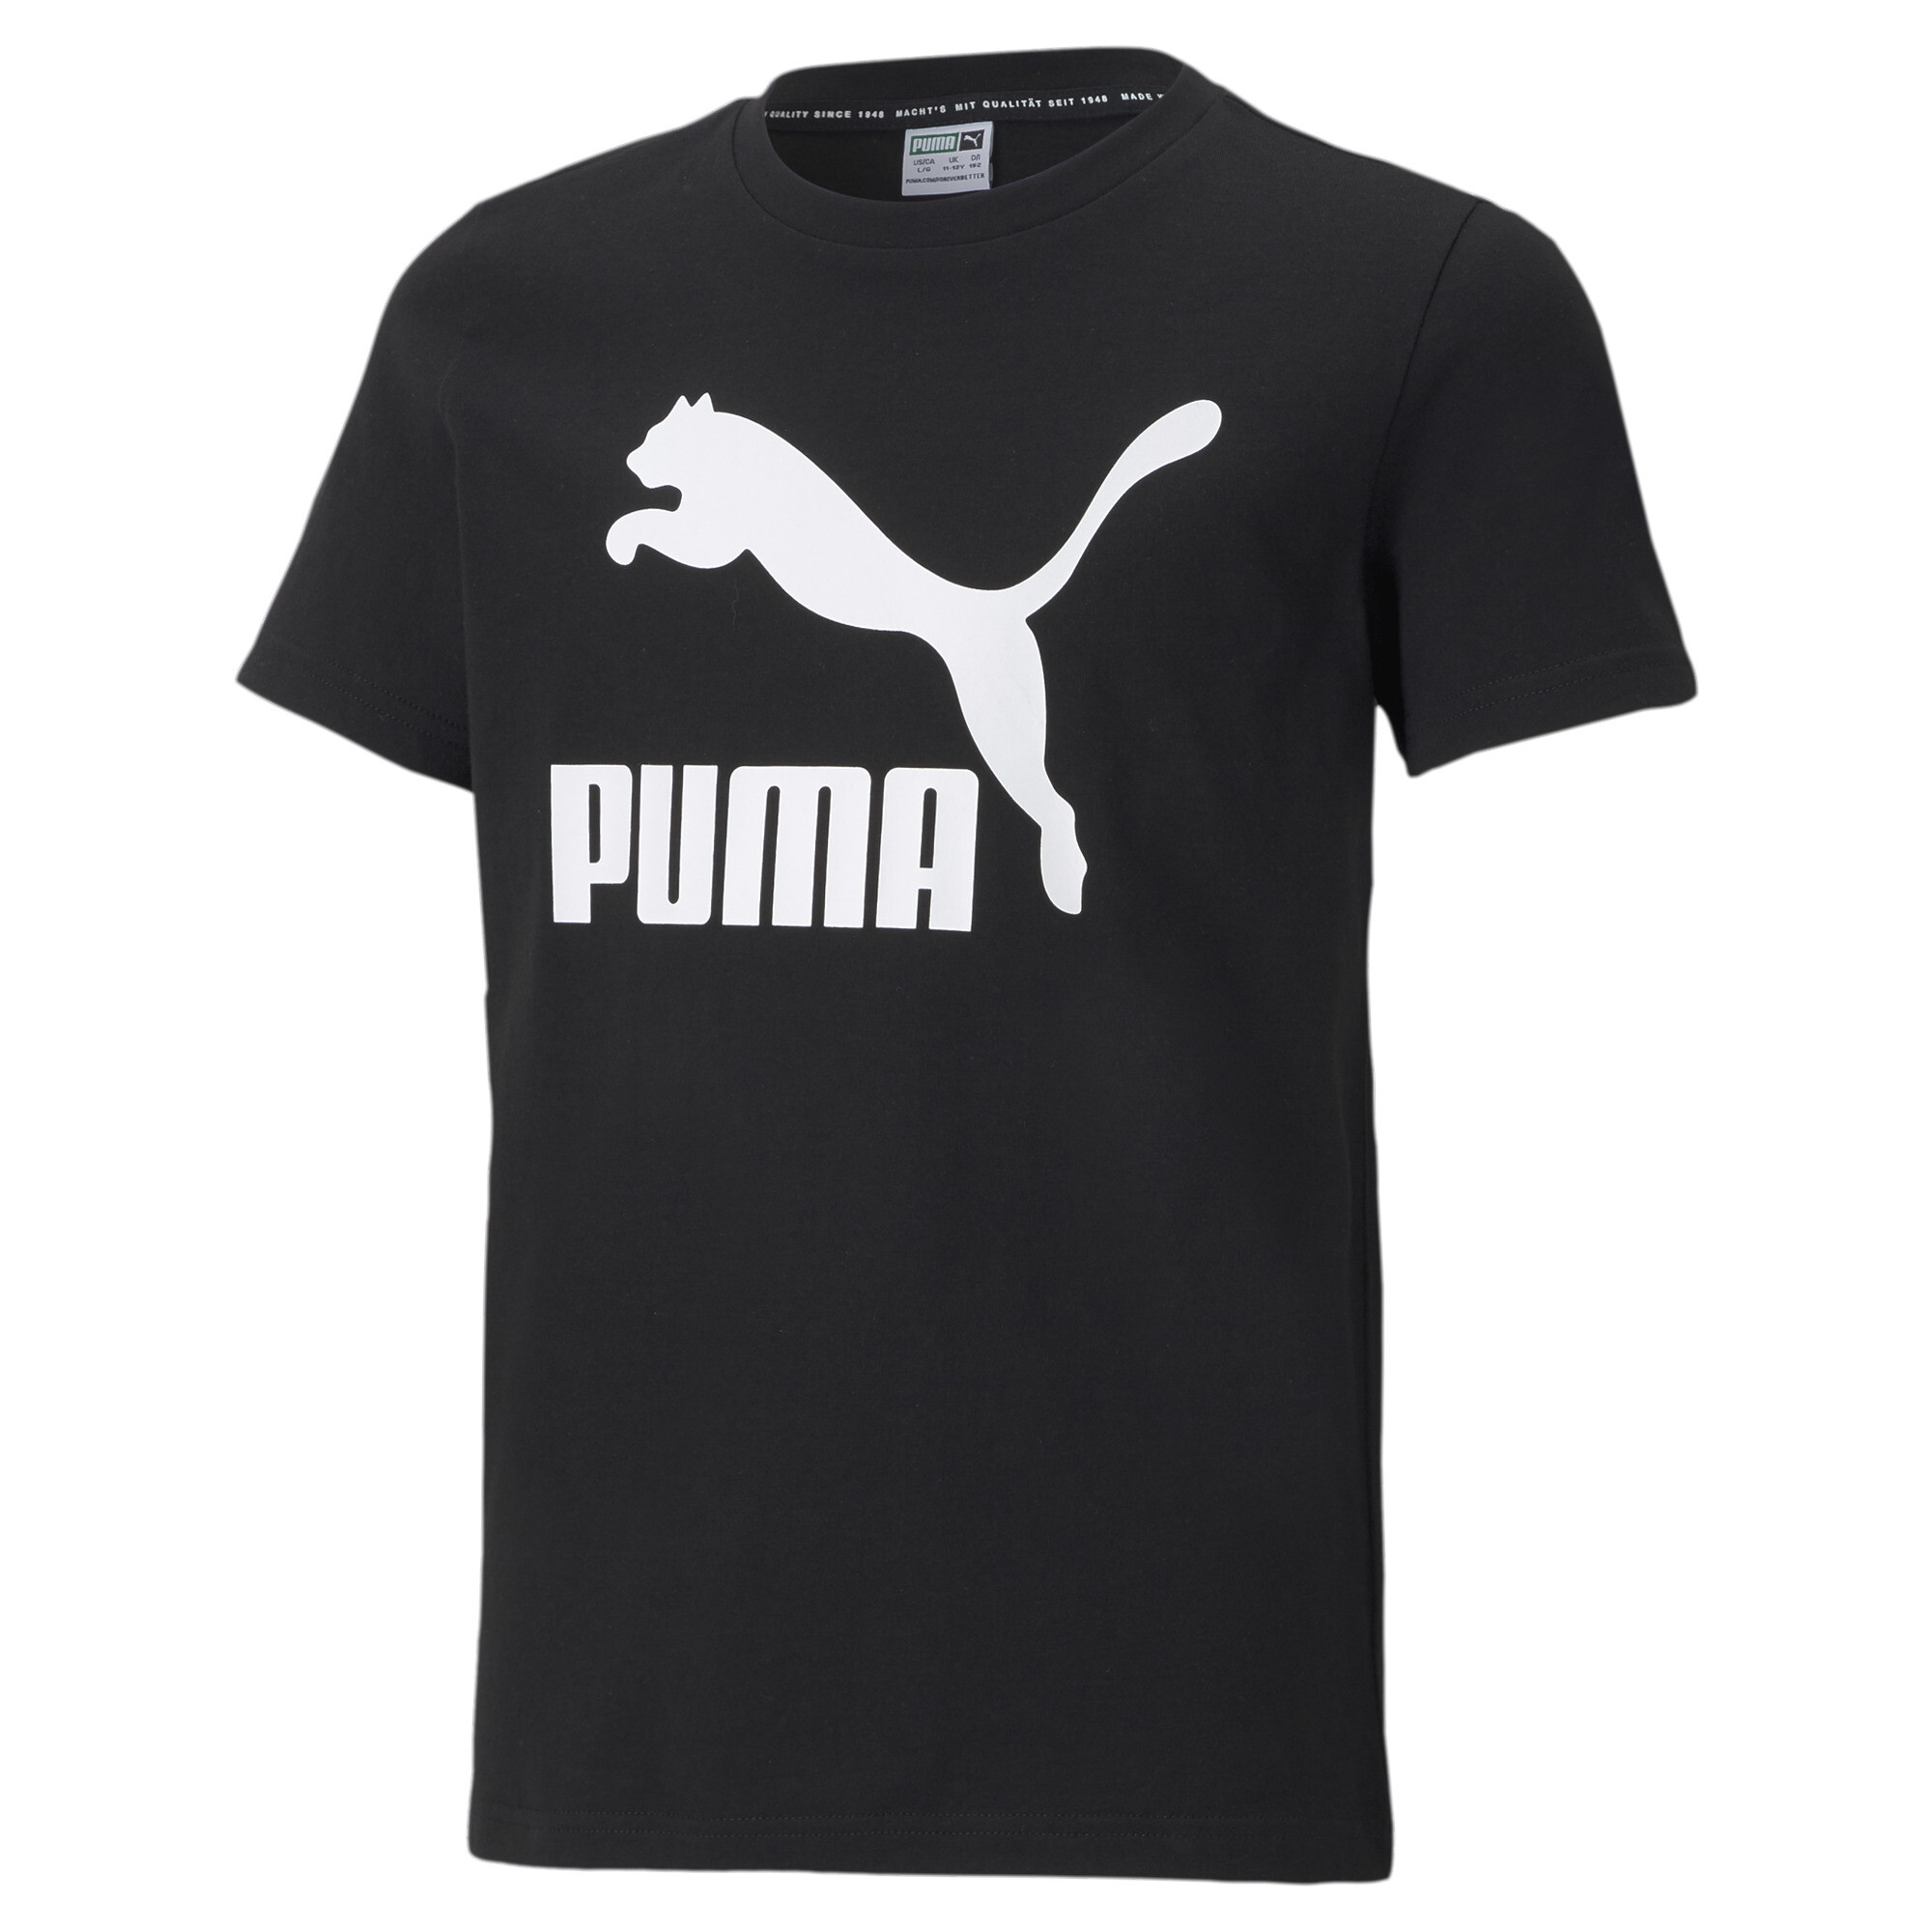 PUMA Classics B T-Shirt In Black, Size 3-4 Youth